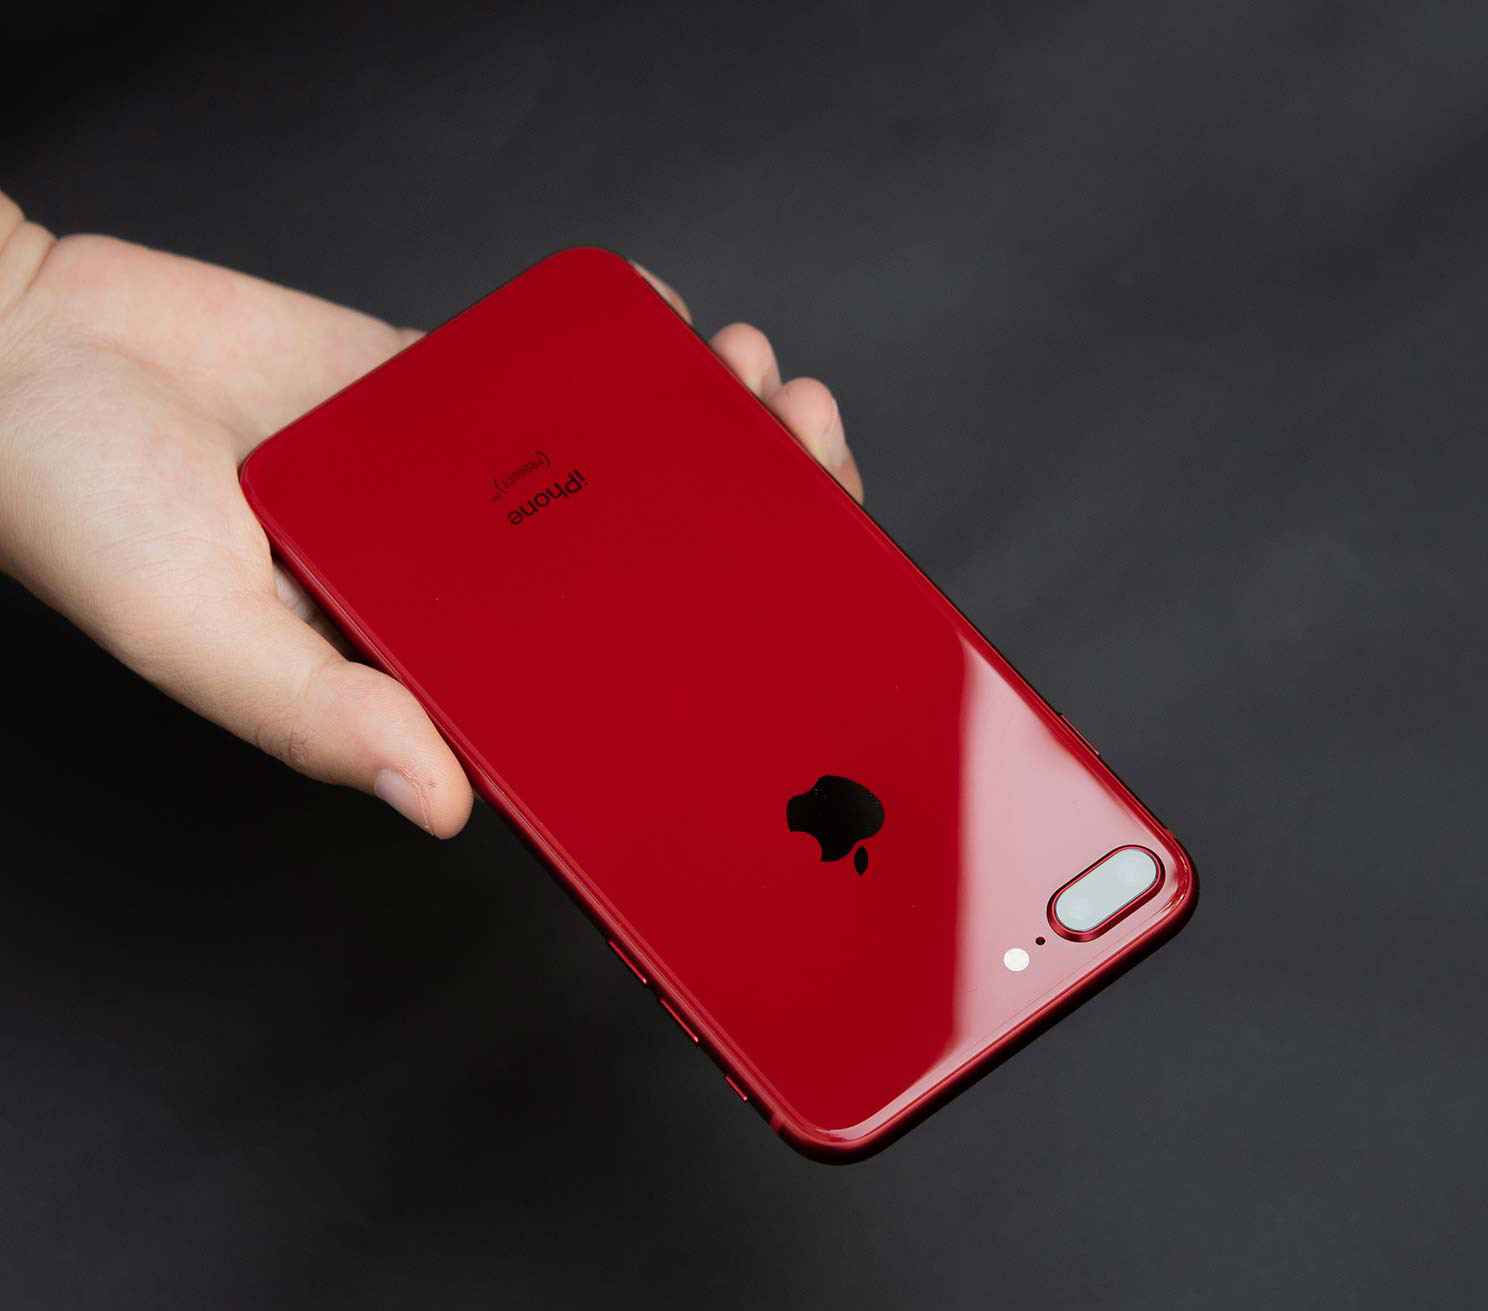 Trên tay iPhone 8+ RED 256GB